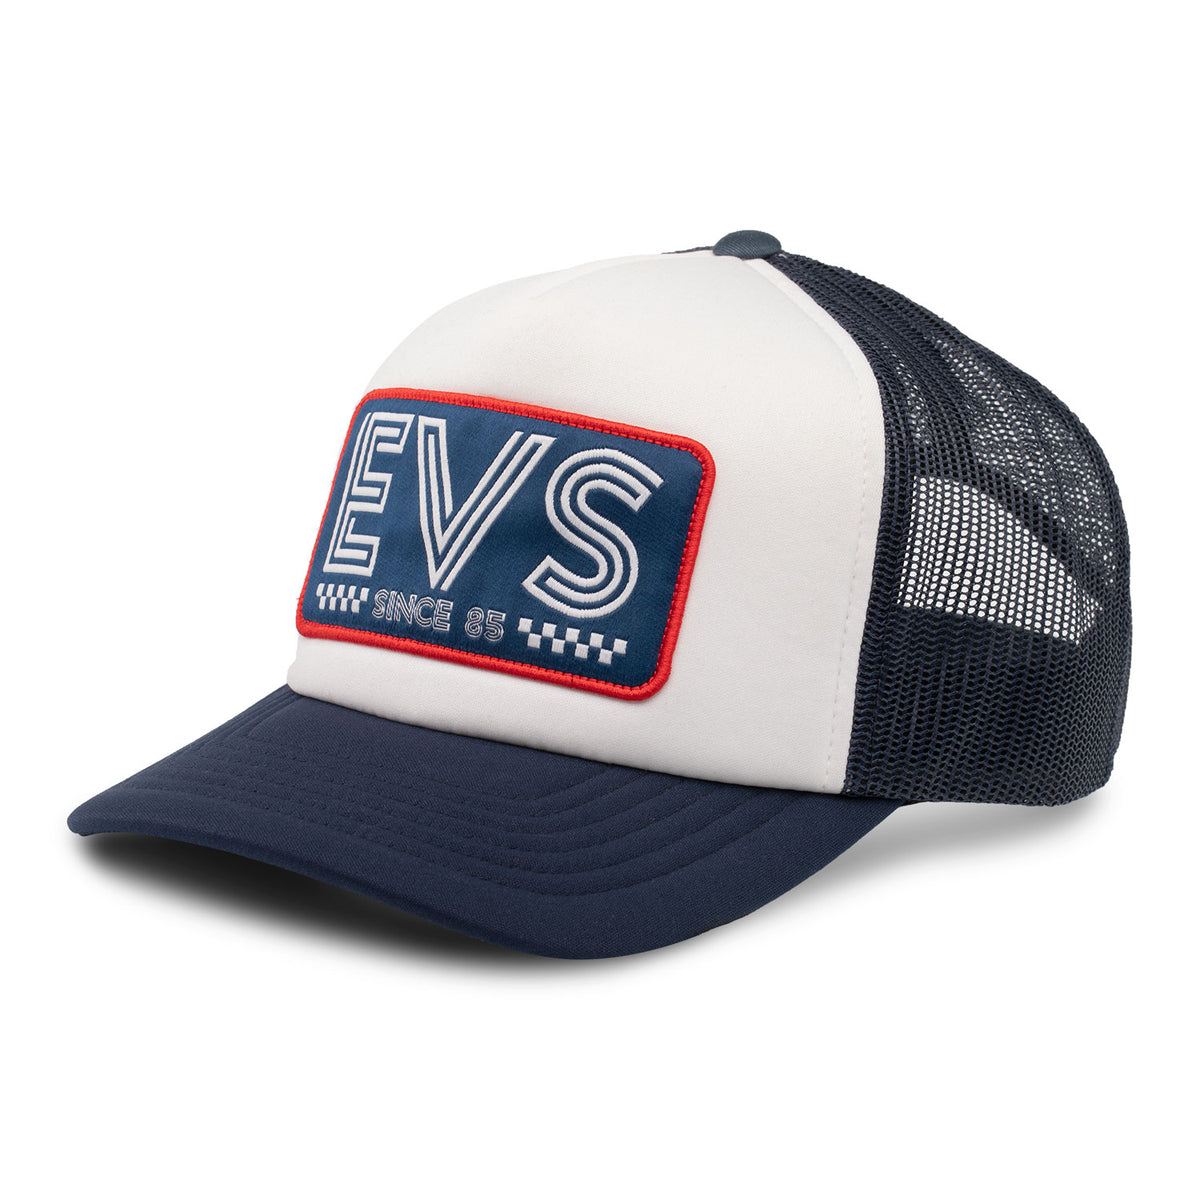 EVS Hat - Torino - EVS Sports